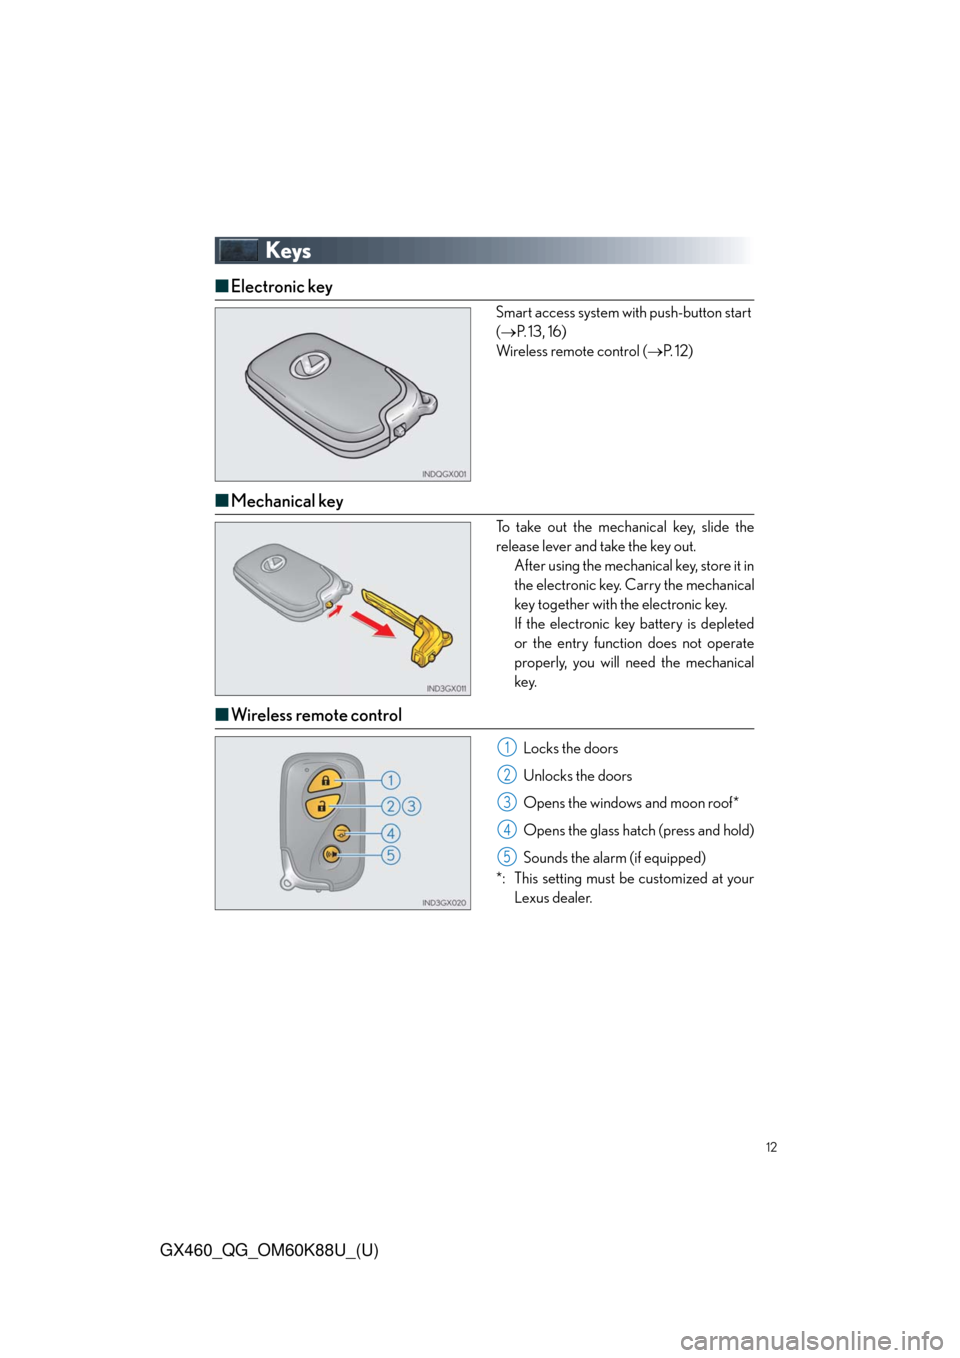 Lexus GX460 2014  Key information / LEXUS 2014 GX460 QUICK GUIDE  (OM60K88U) User Guide 12
GX460_QG_OM60K88U_(U)
Keys
■Electronic key
Smart access system with push-button start 
(P. 13, 16)
Wireless remote control (P. 1 2 )
■Mechanical key
To take out the mechanical key, slide 